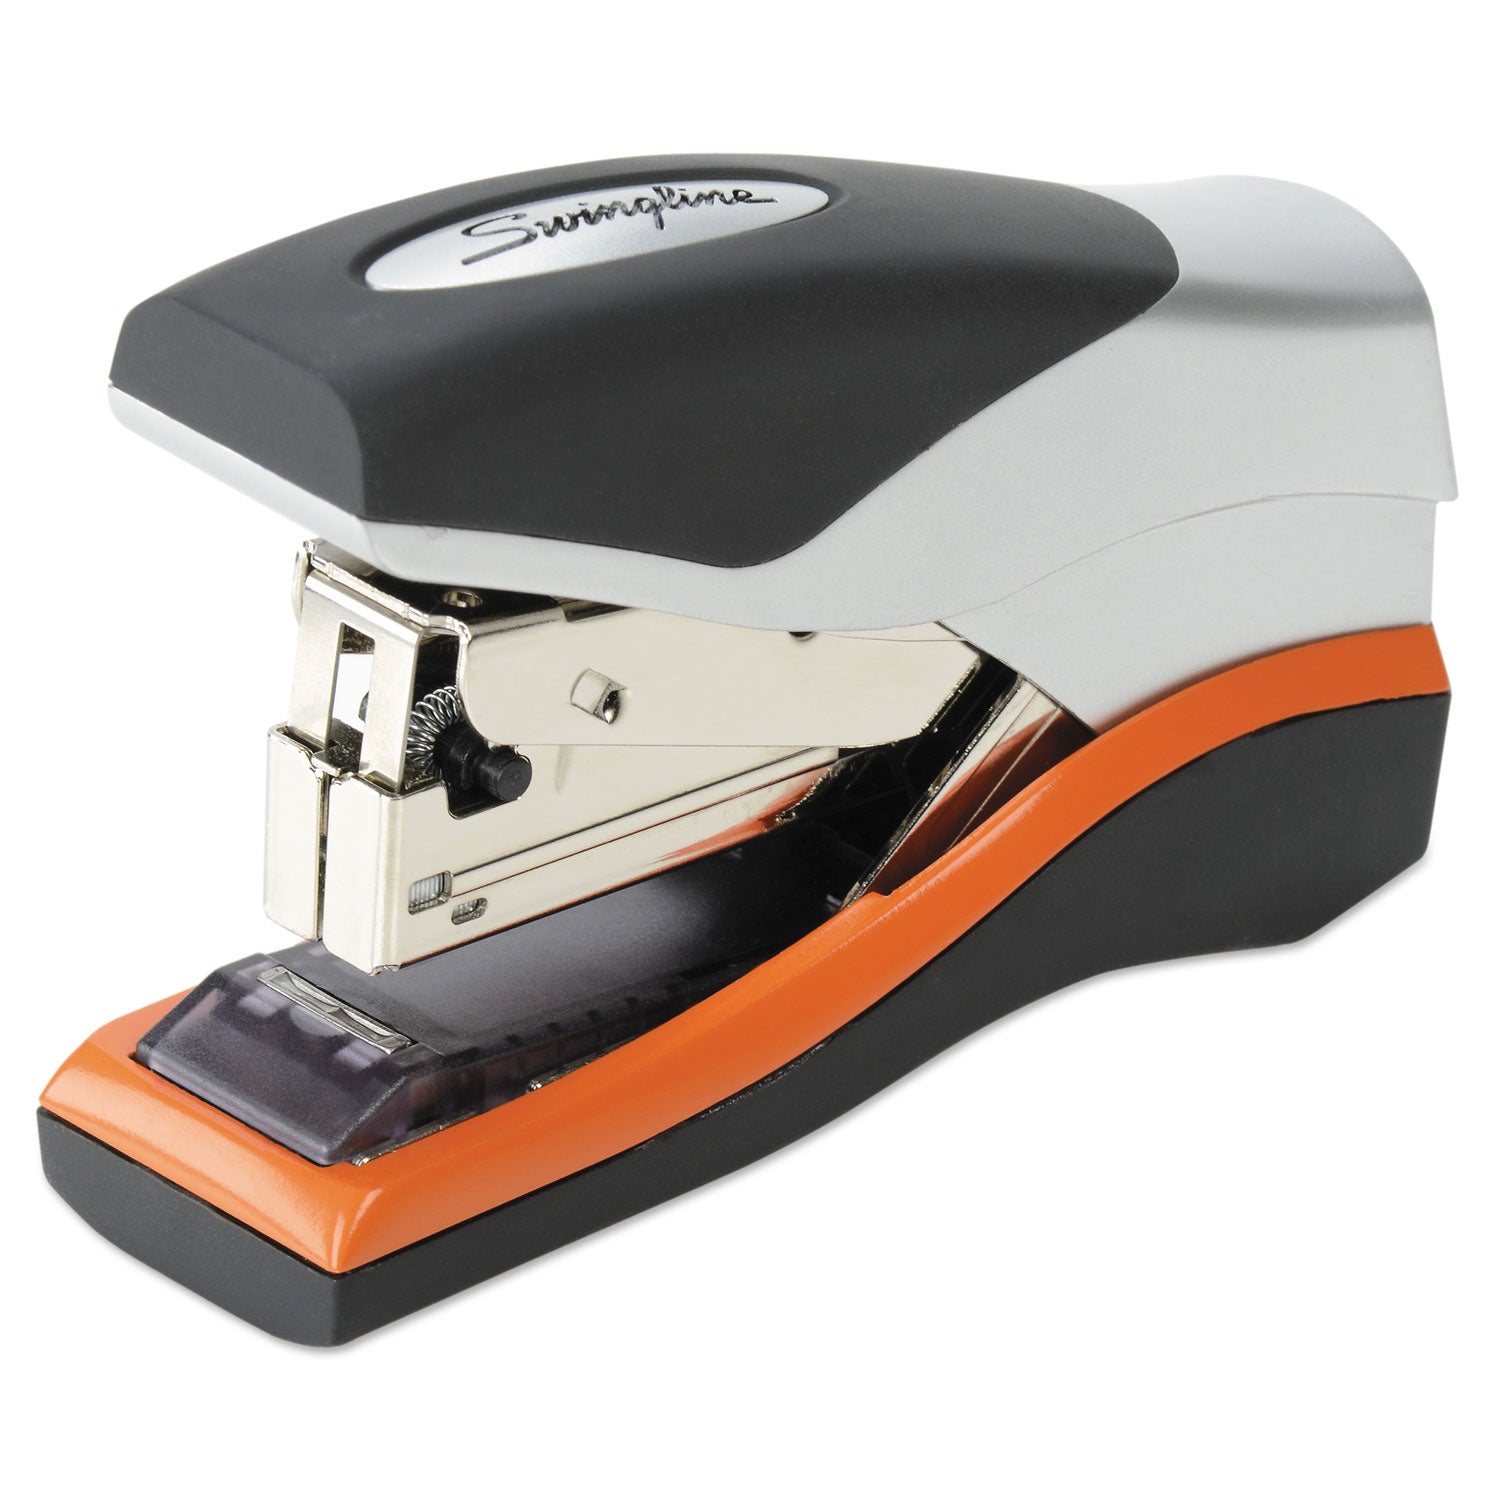 optima-40-compact-stapler-40-sheet-capacity-black-silver-orange_swi87842 - 1